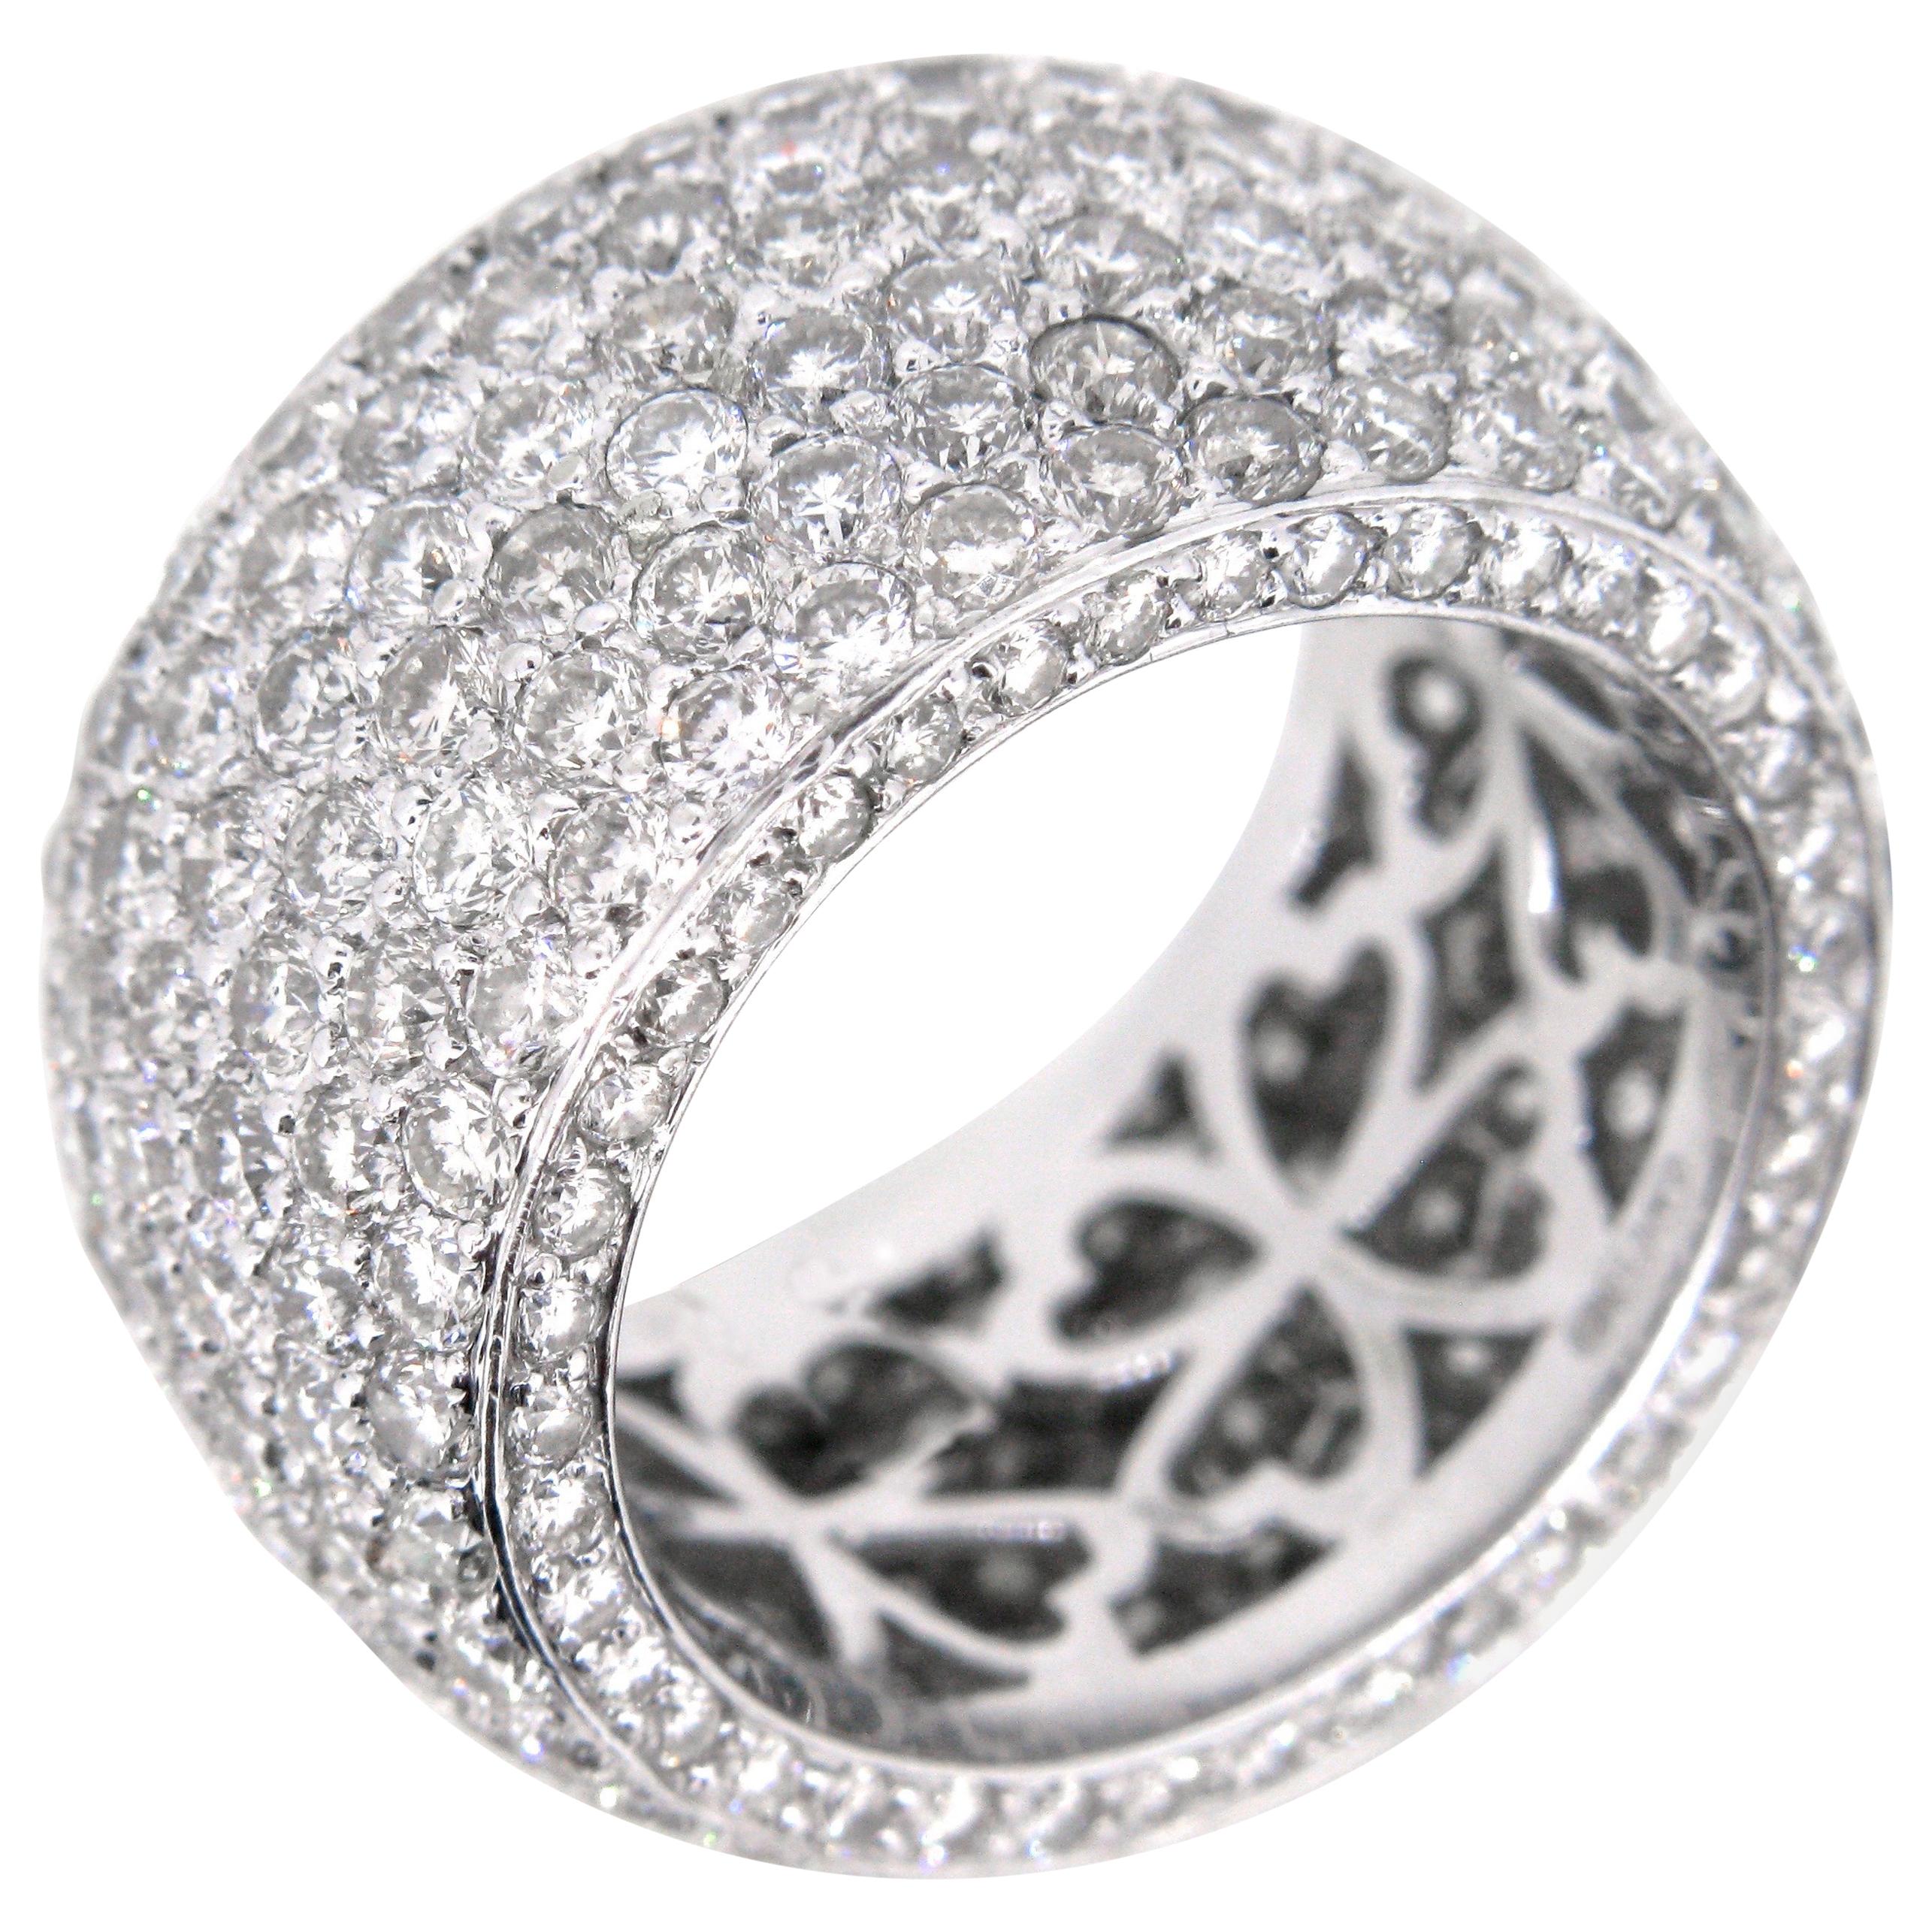 Large Band Pave Diamonds White Gold Design Fashion Ring